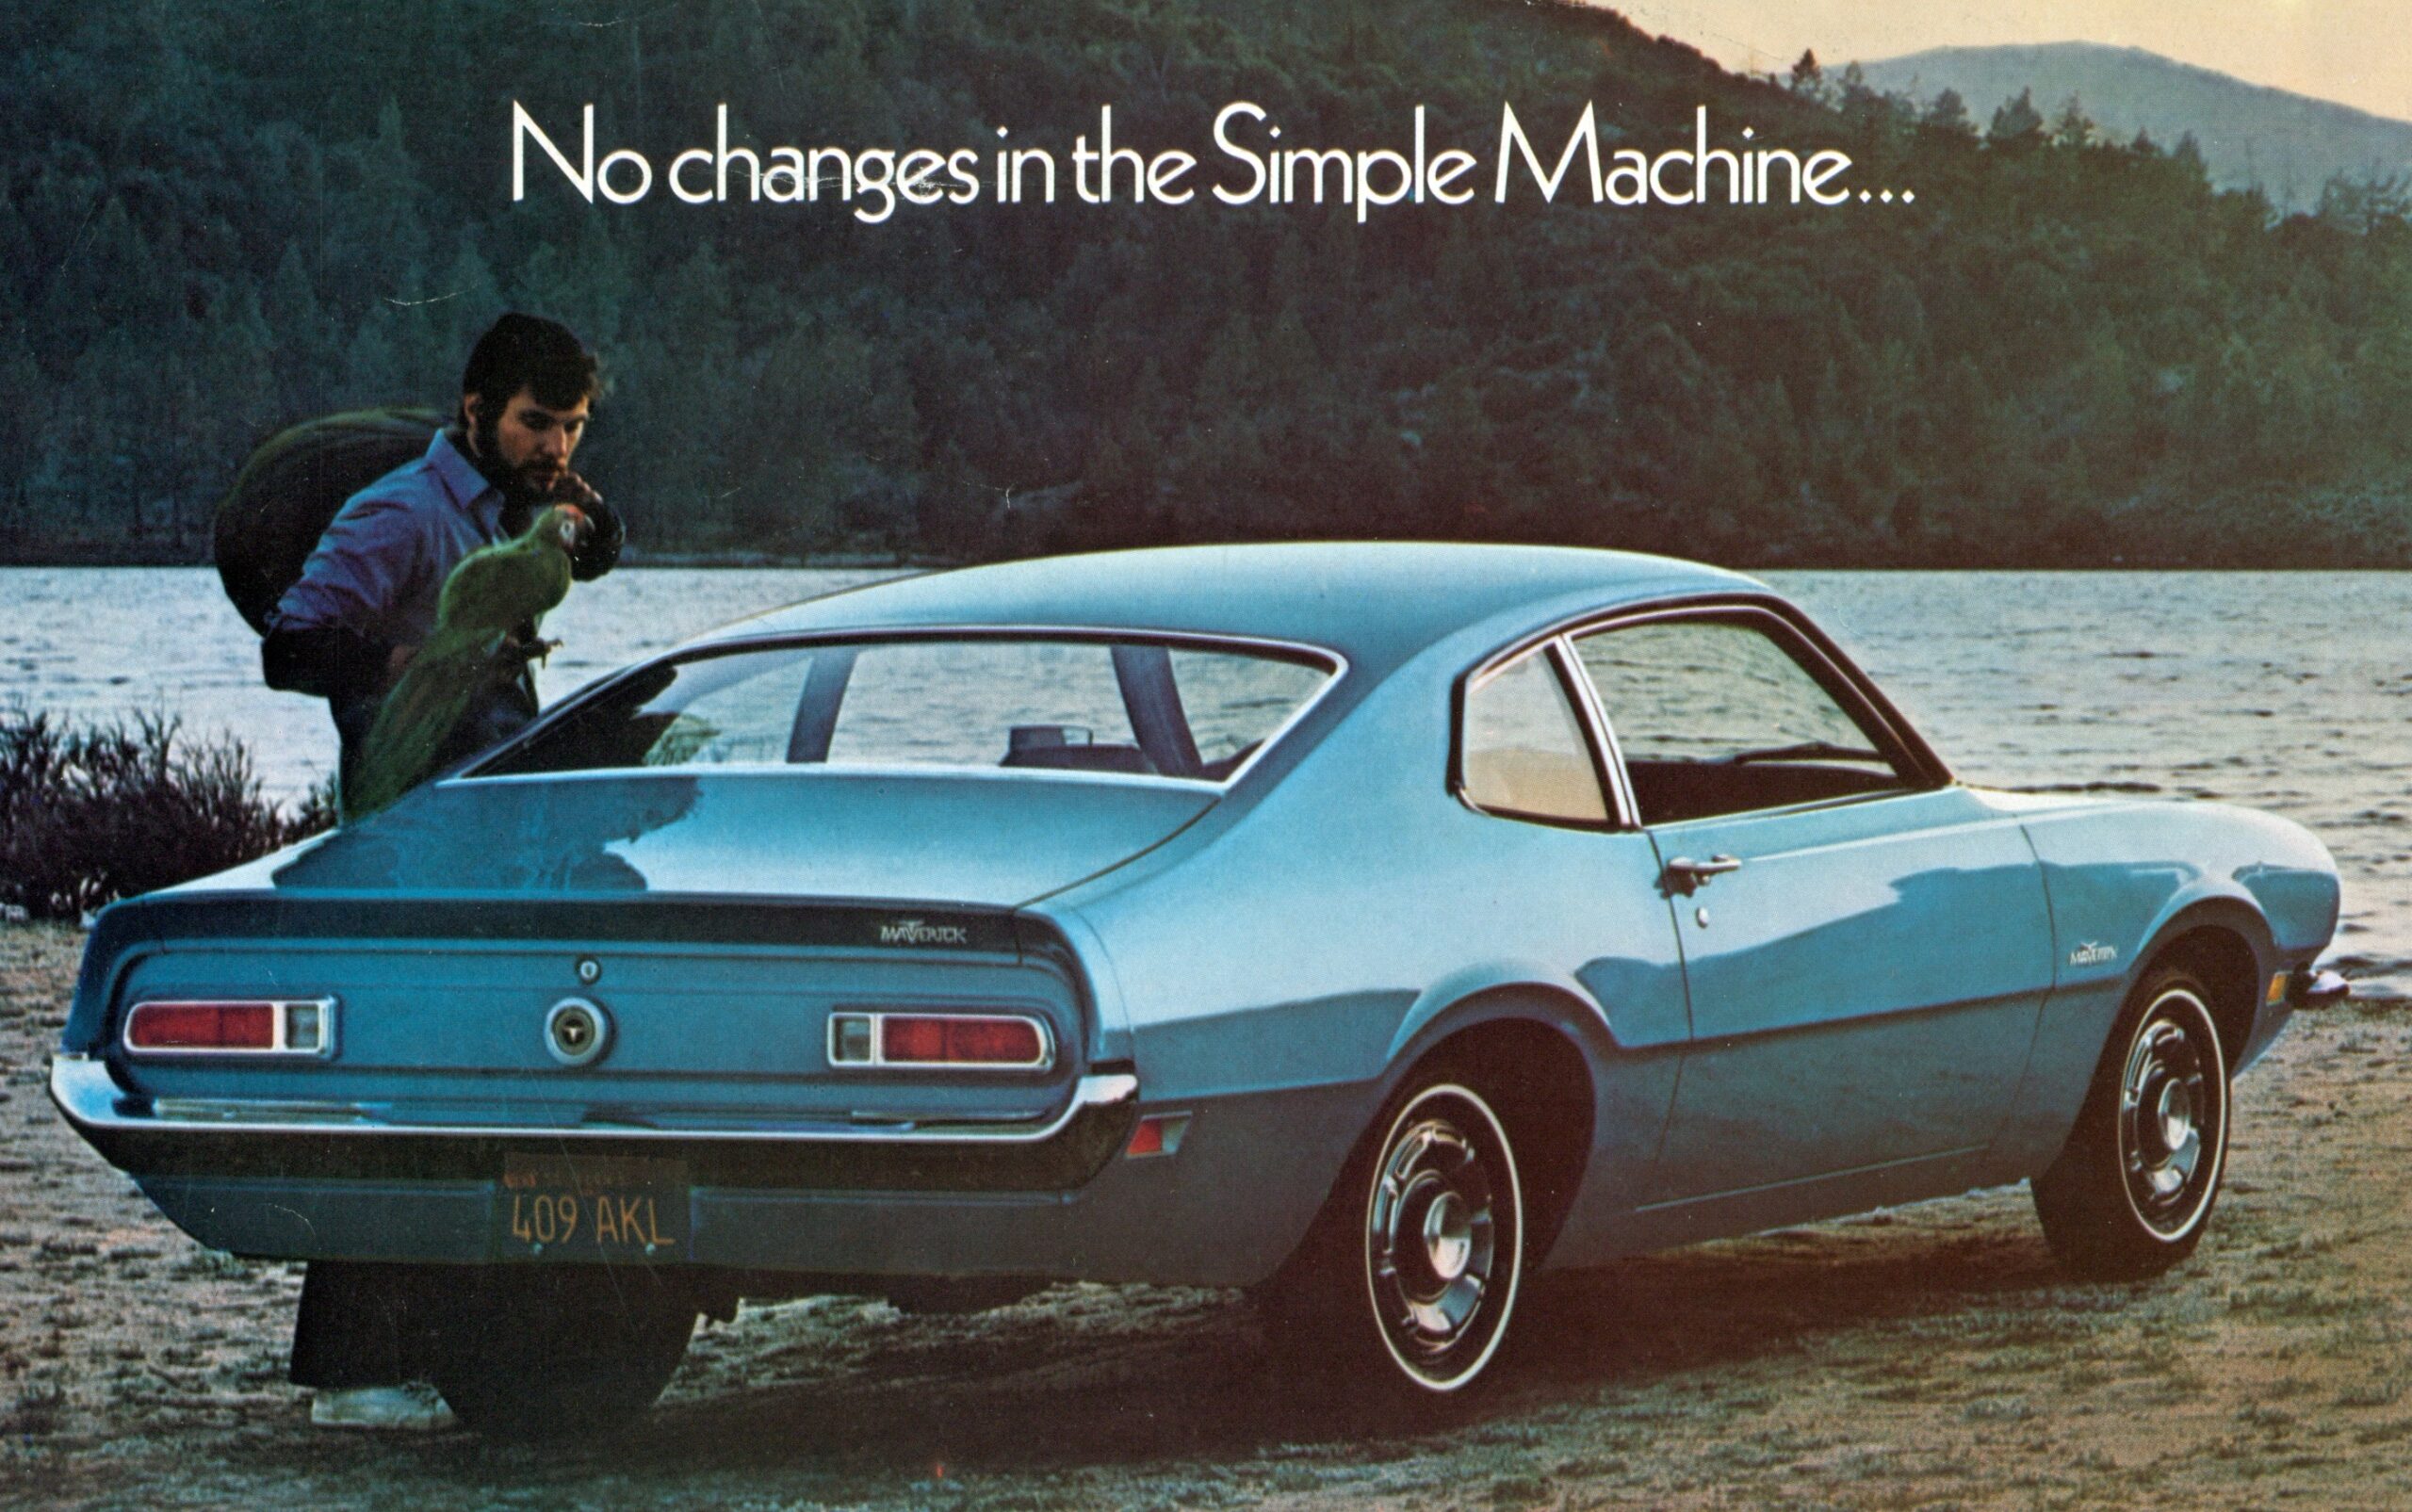 Ford Maverick Simple Machine